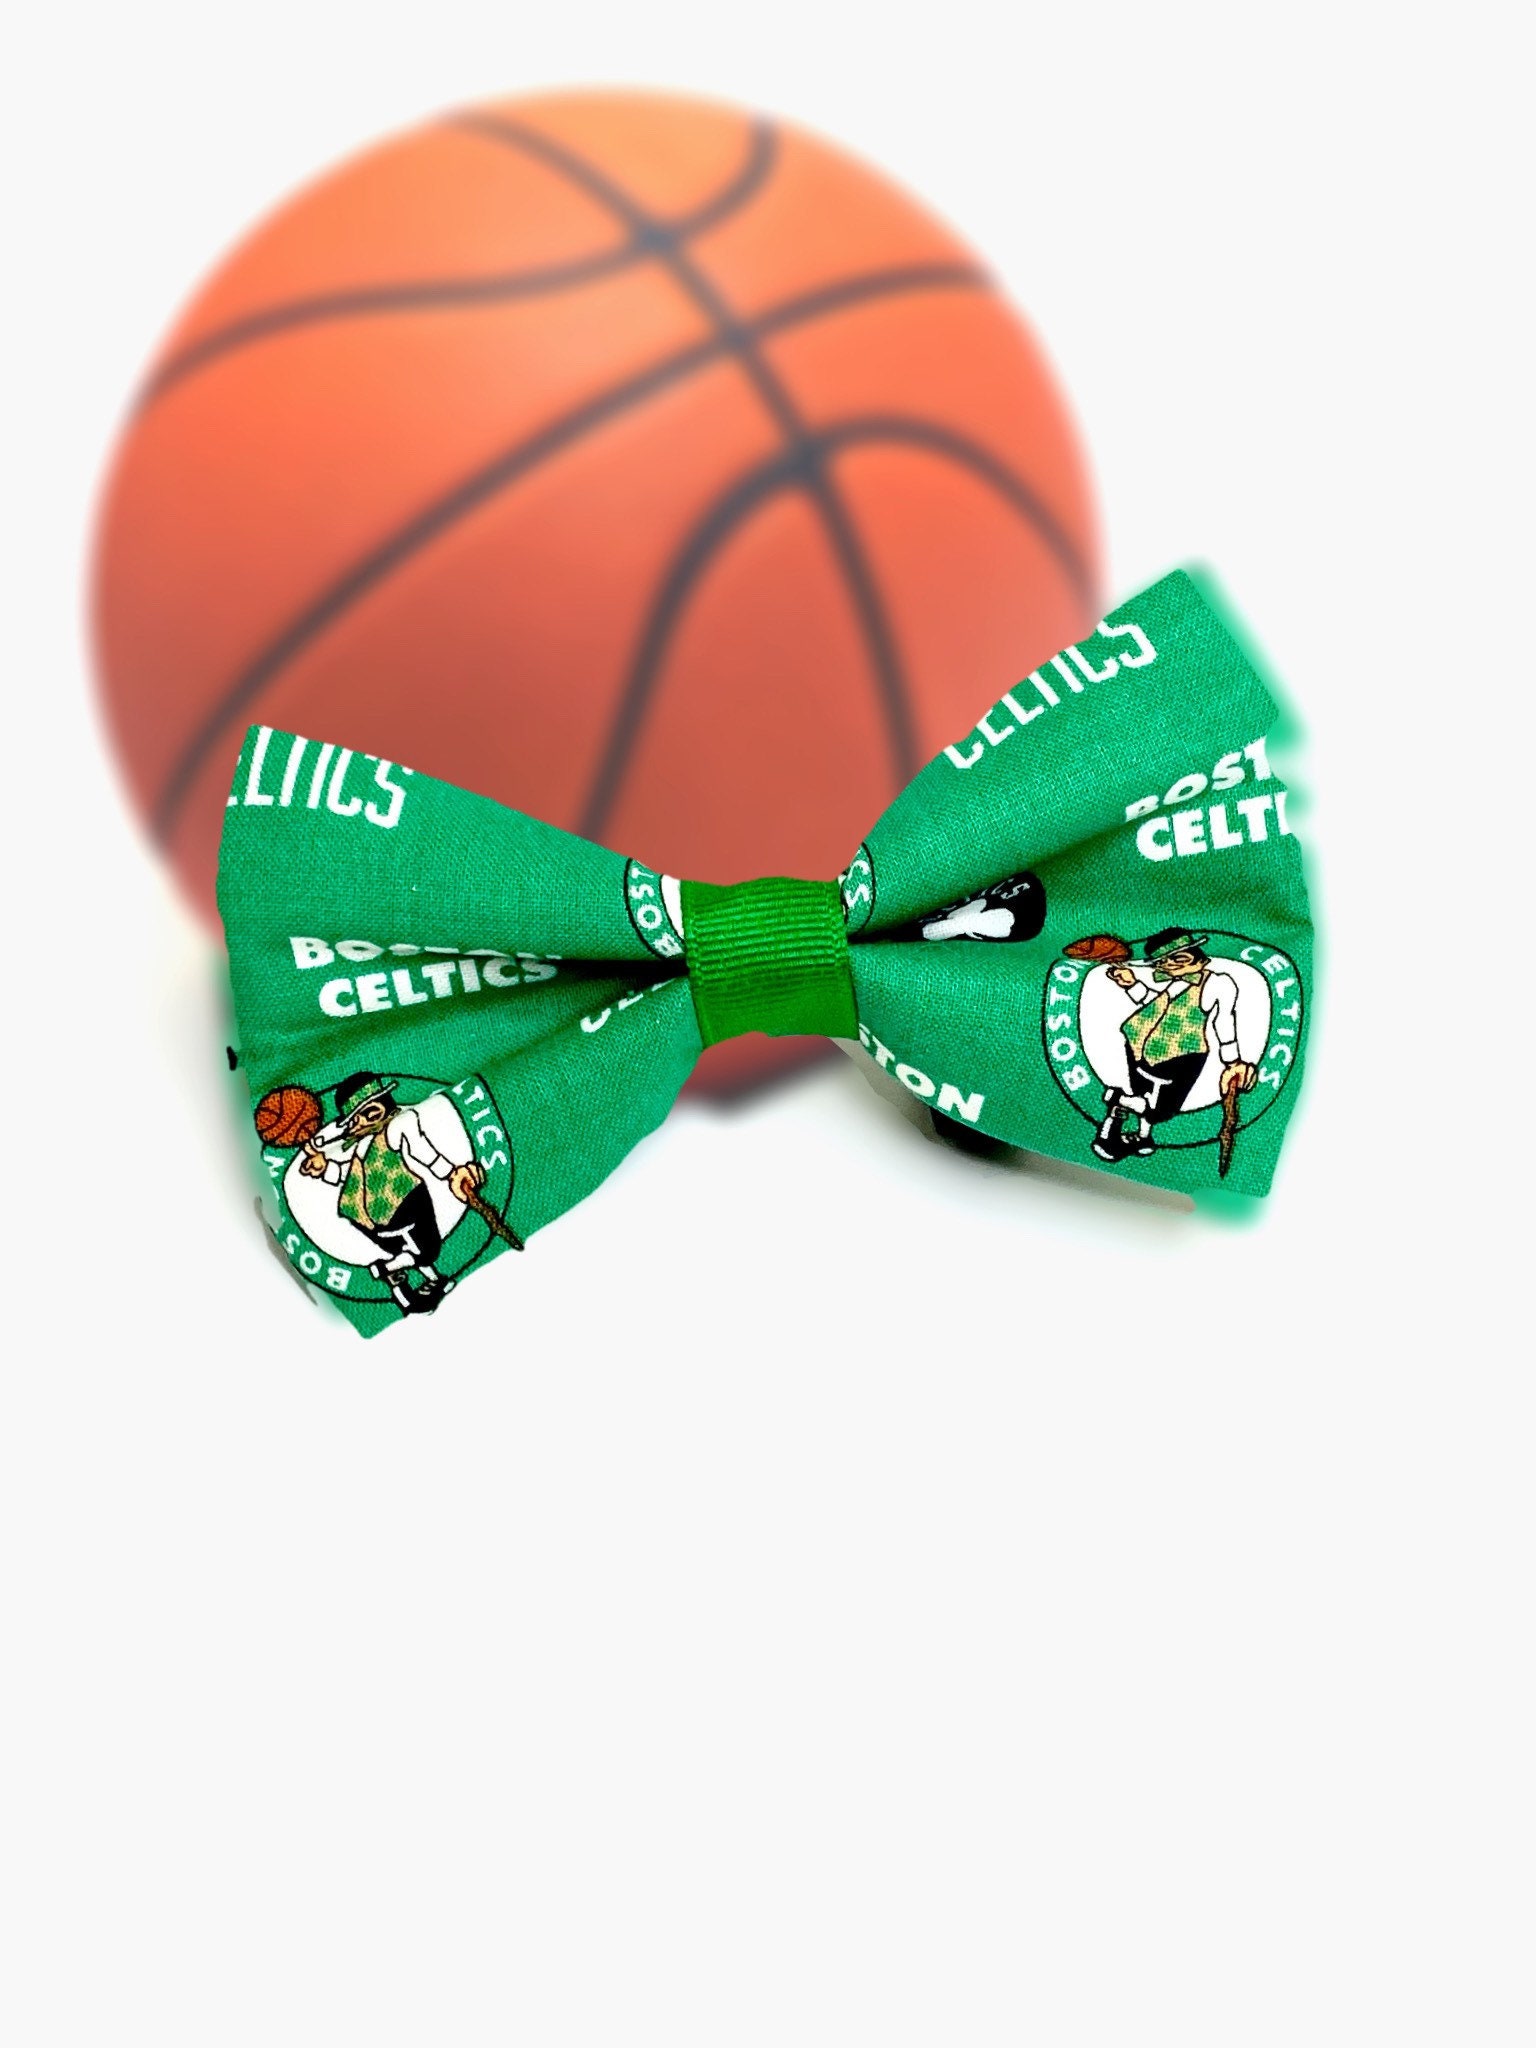 All Star Dogs: Boston Celtics Pet apparel and accessories